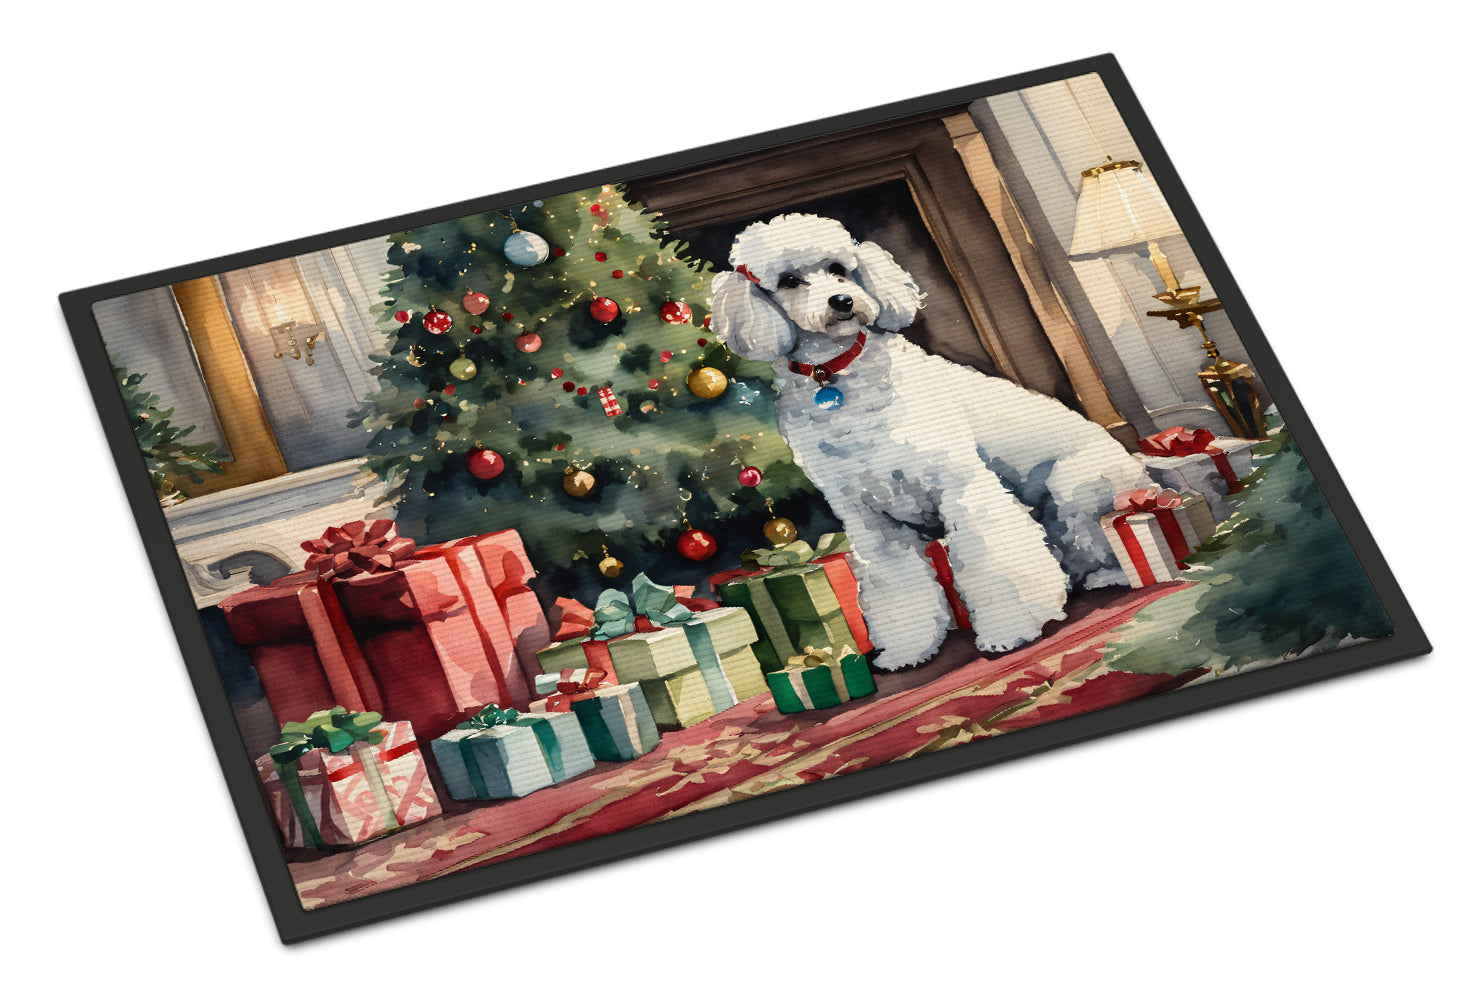 Buy this Poodle Cozy Christmas Doormat